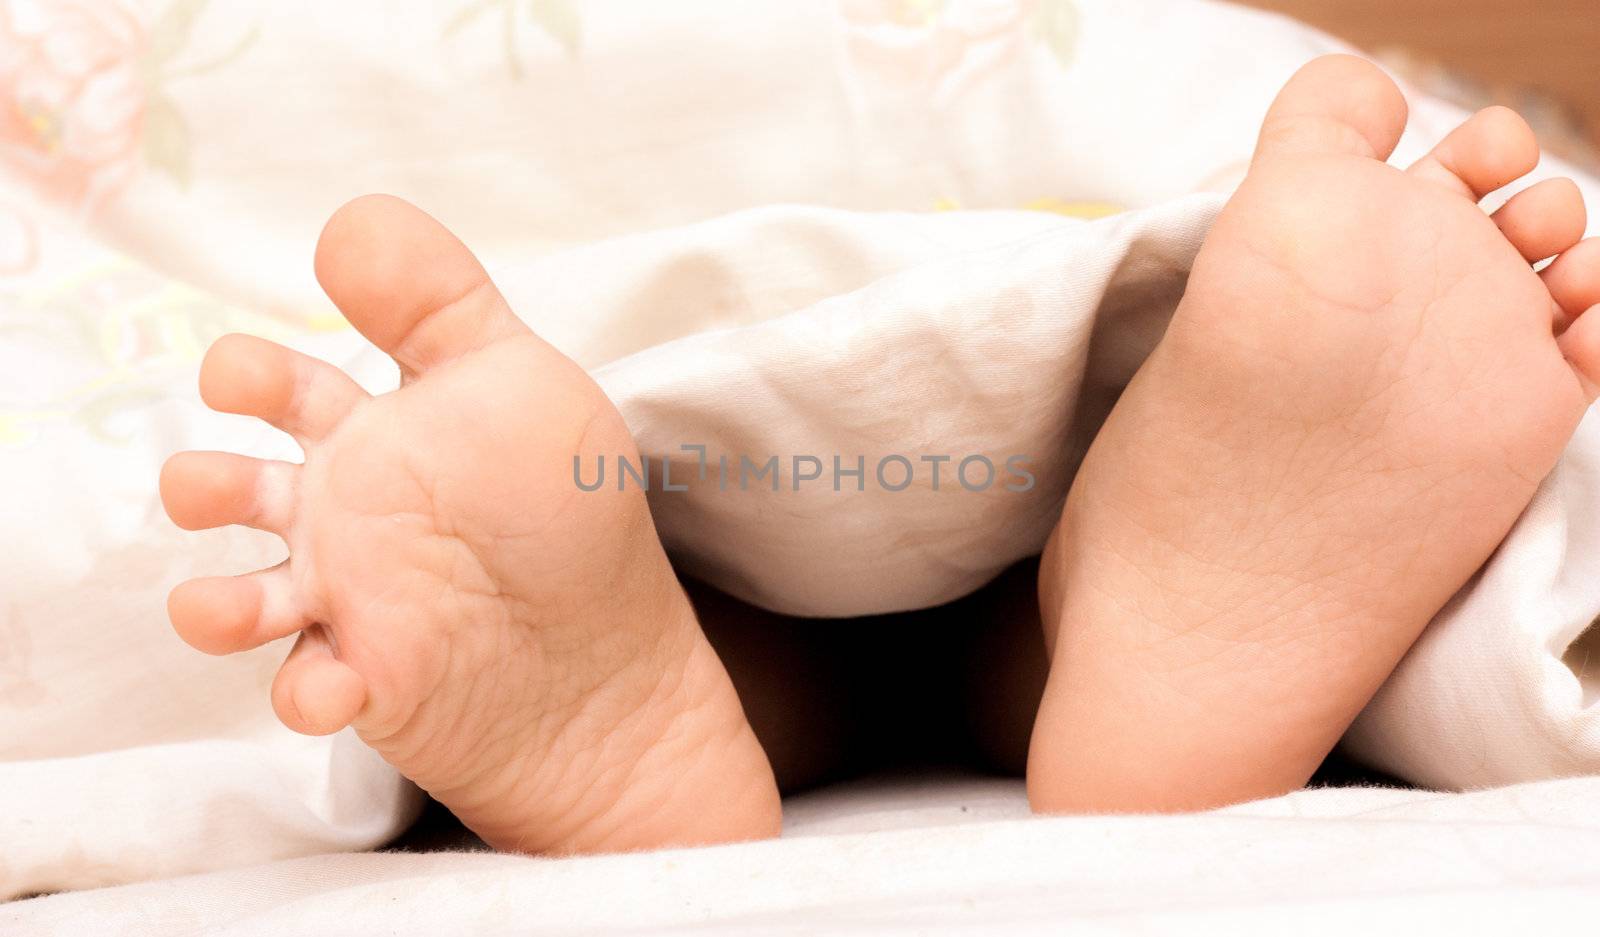 Baby feet under a blanket by AGorohov